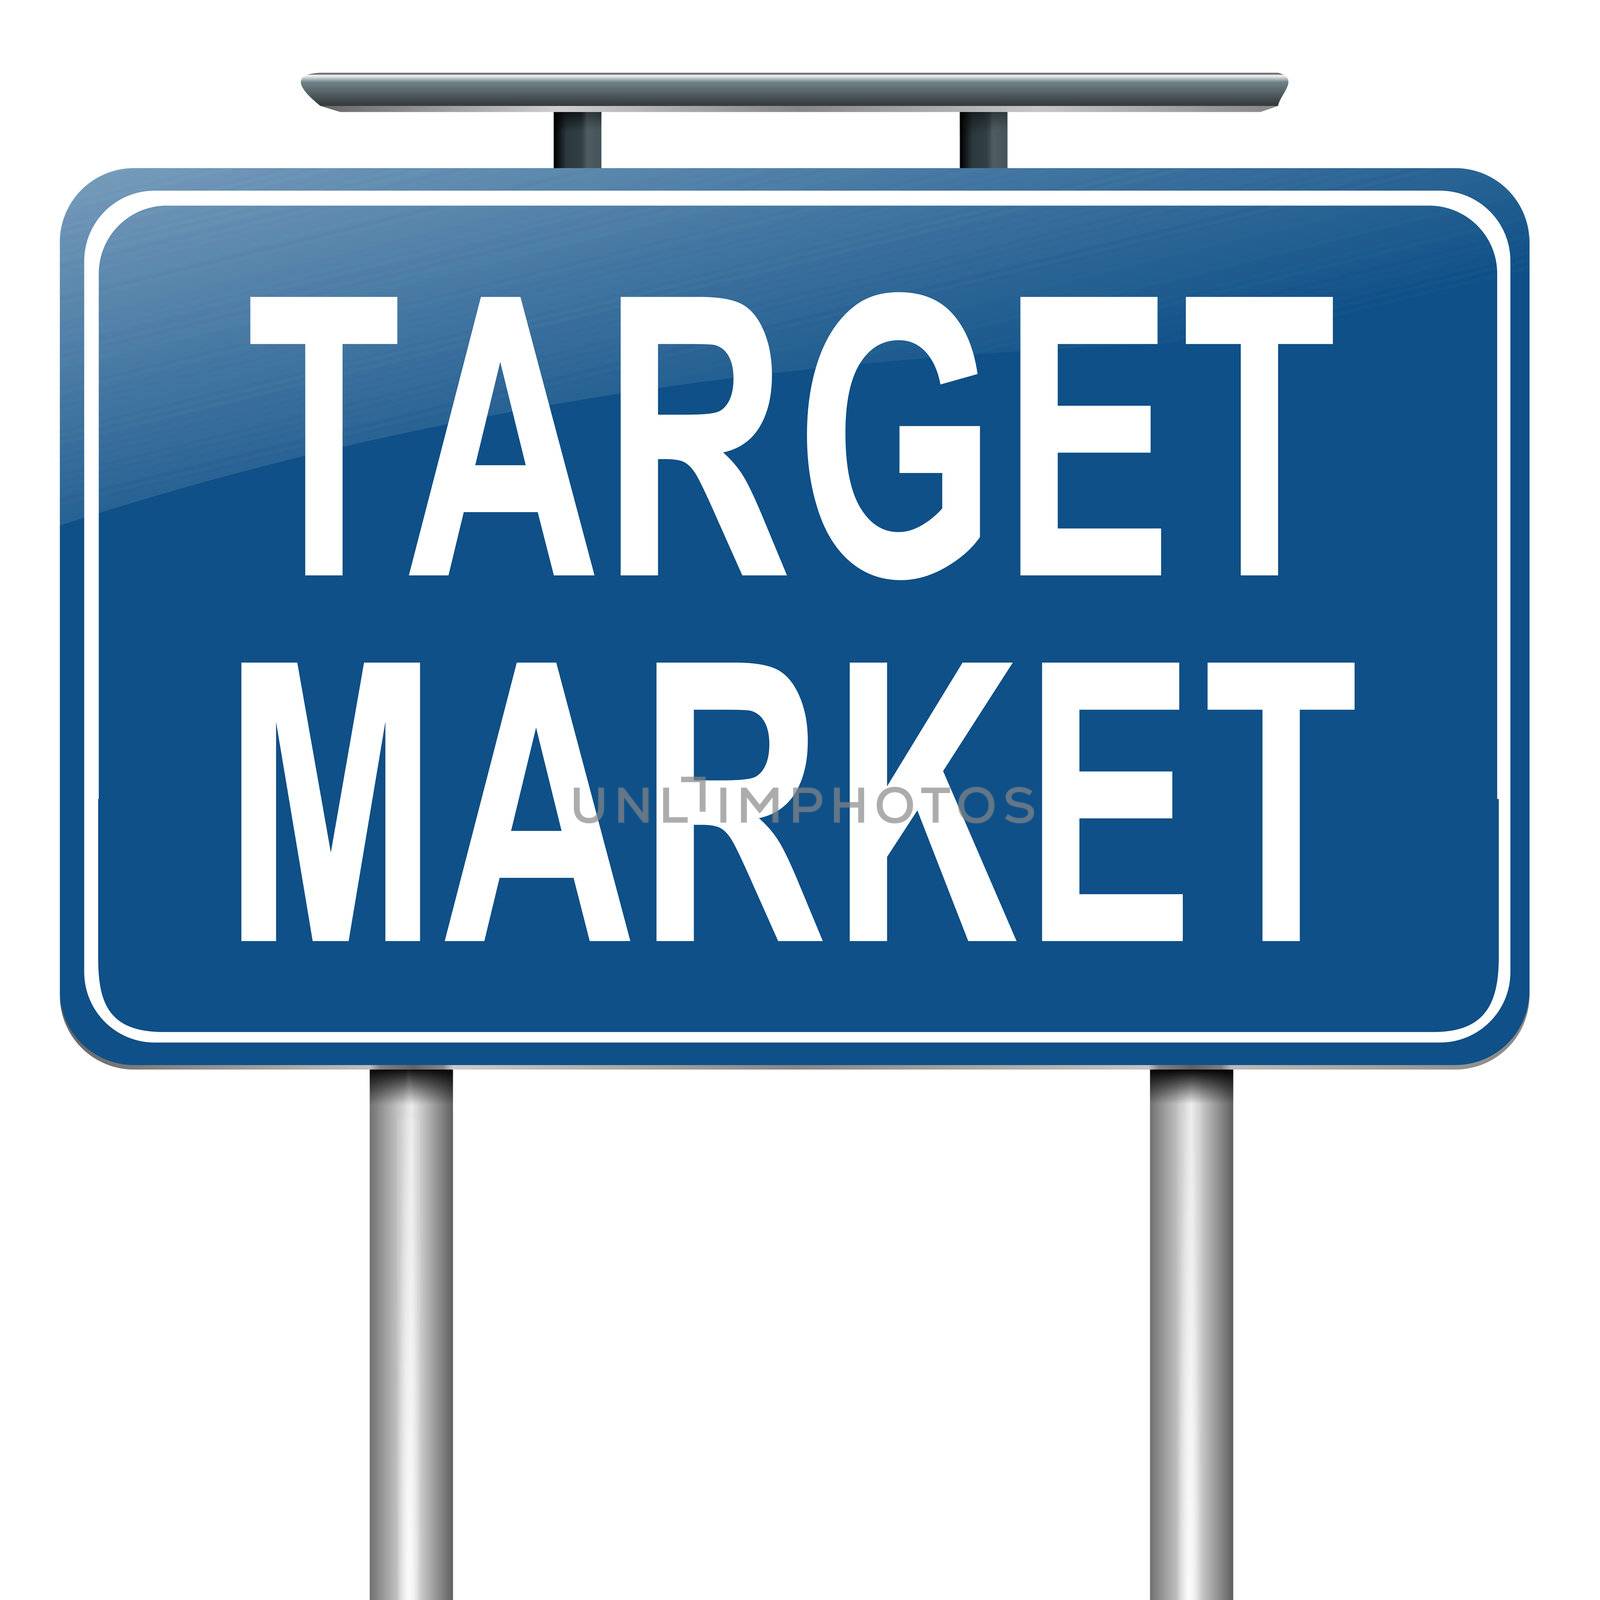 Target market. by 72soul